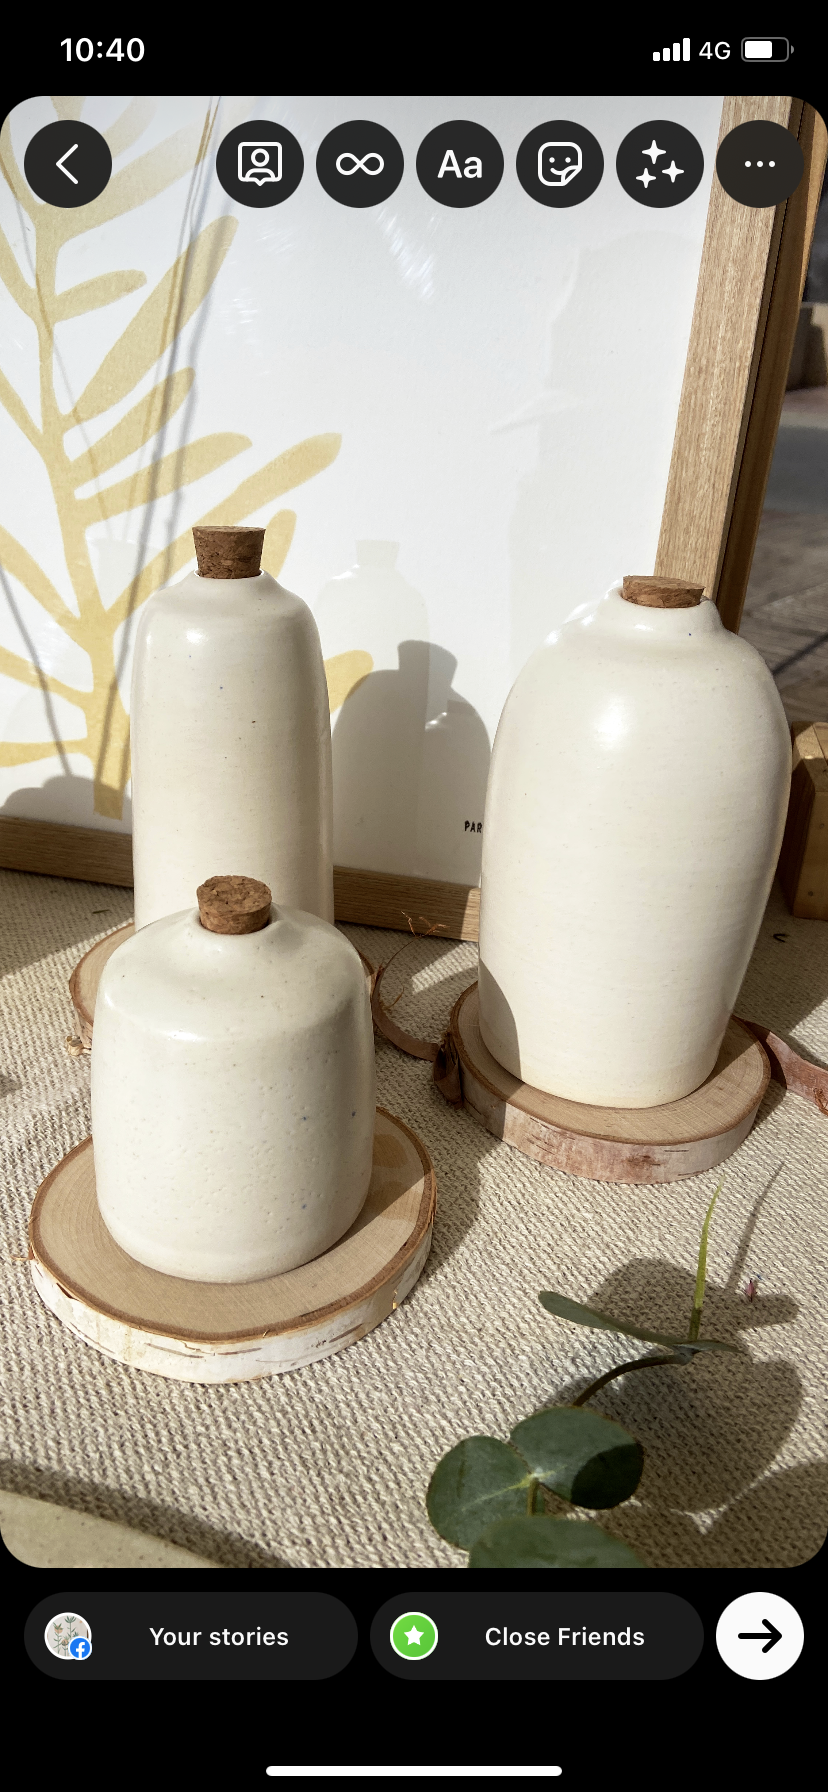 White vase with cork